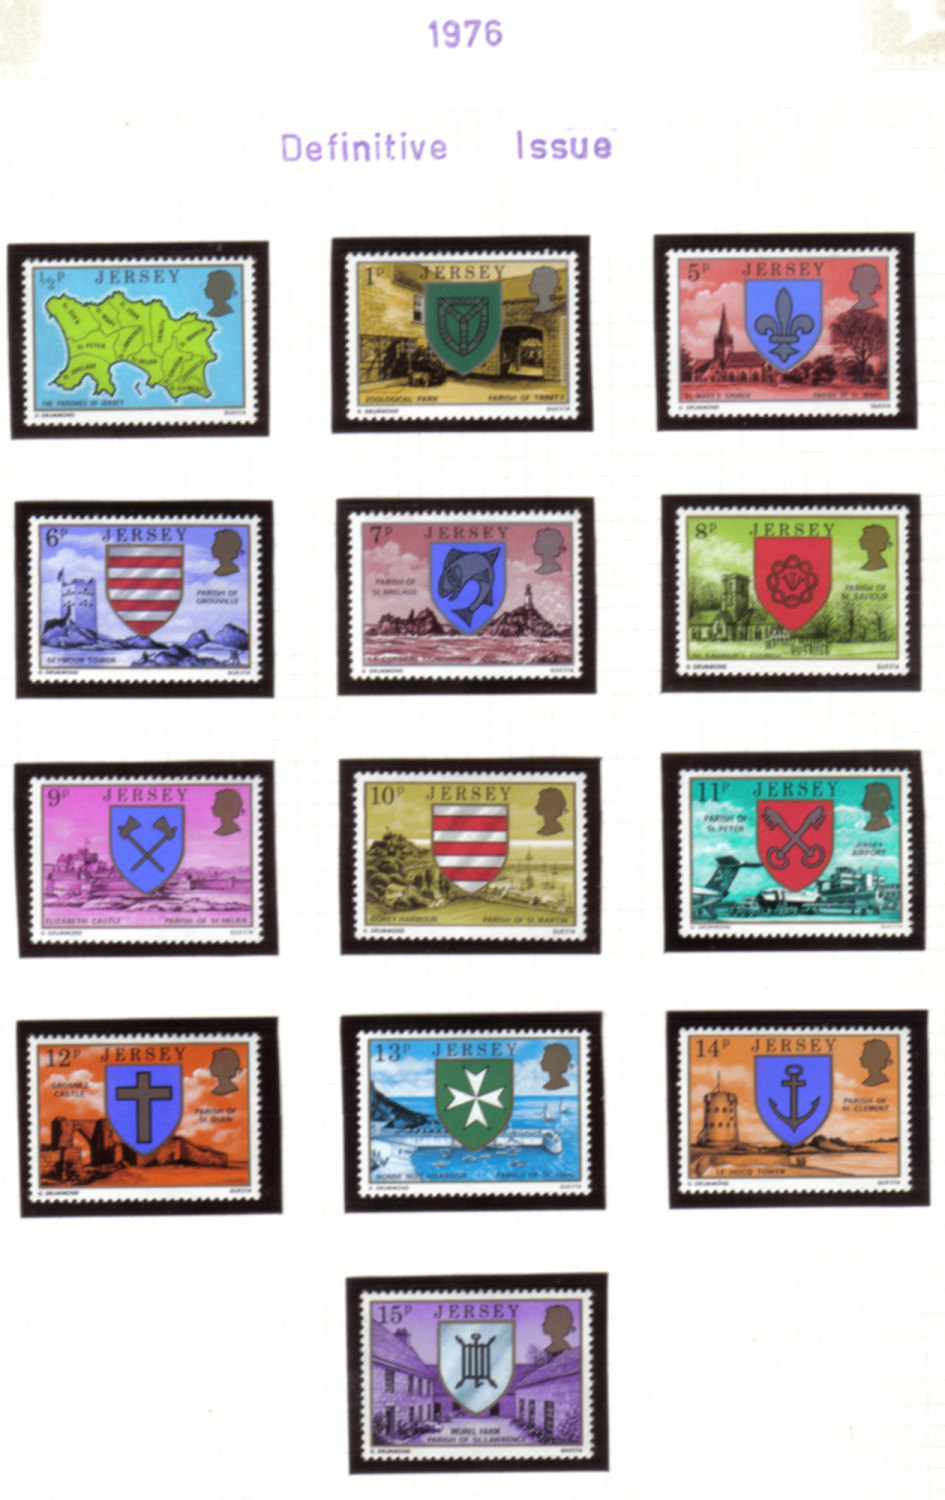 Jersey Stamps 1976 Definitives Full set - MINT (z534)